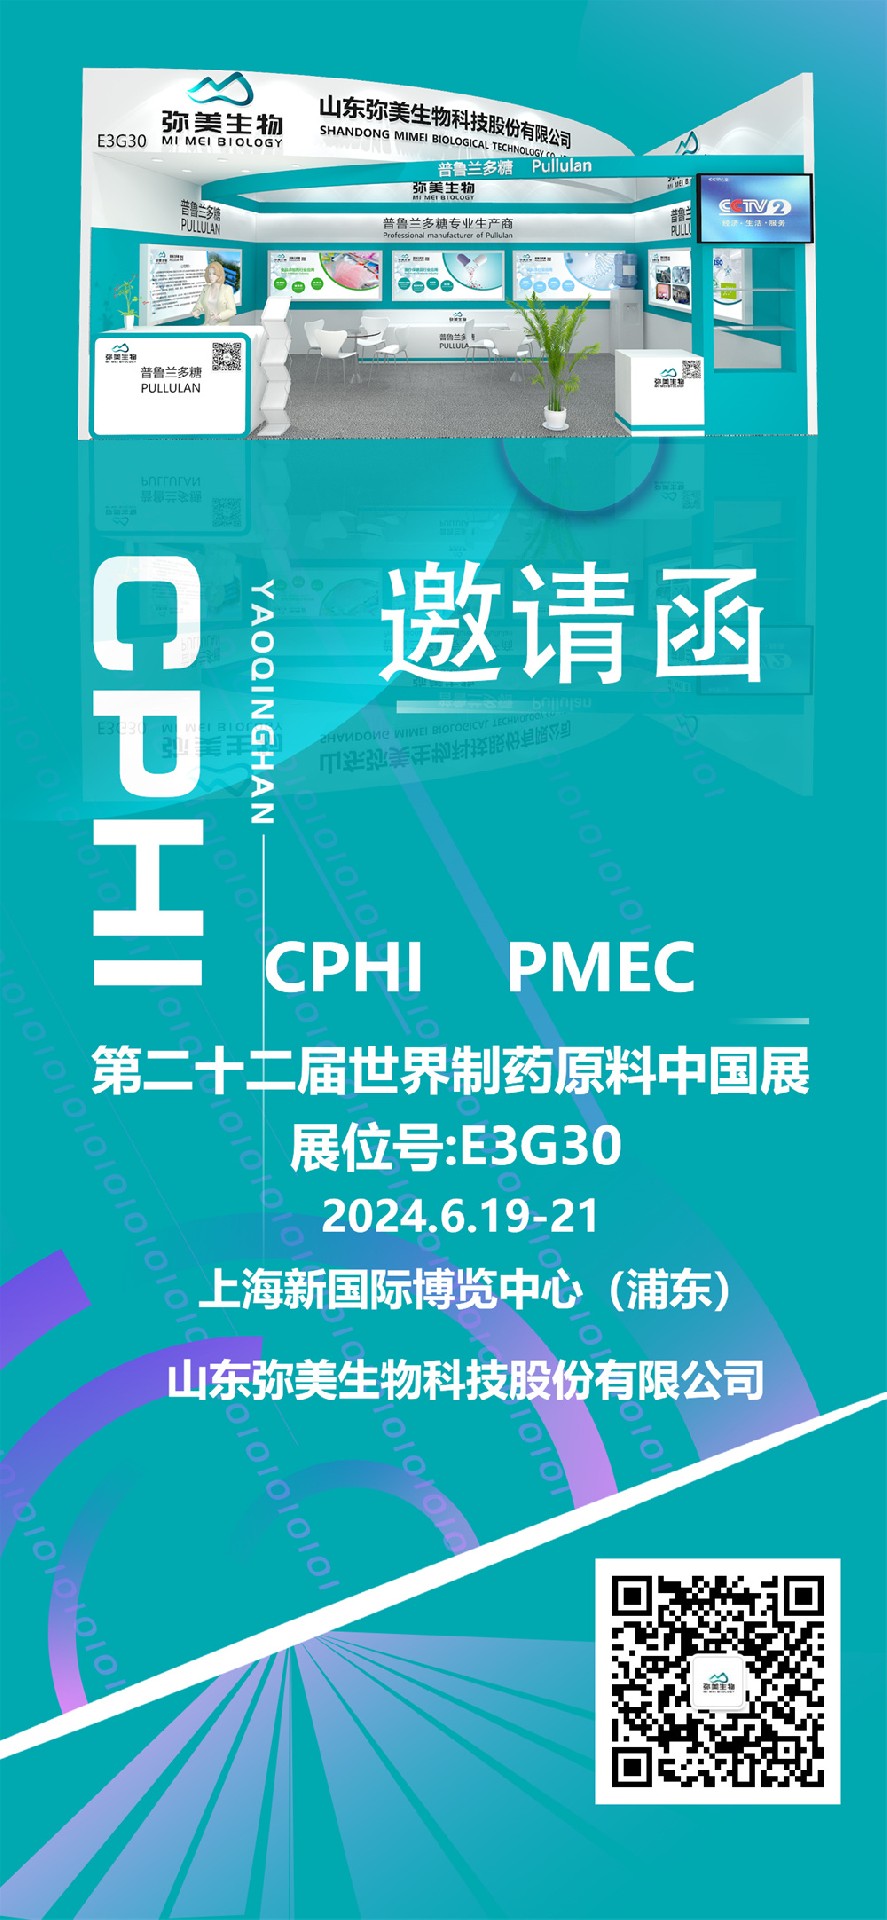 CPHI PMEC 22nd World Pharmaceutical Raw Materials China Exhibition